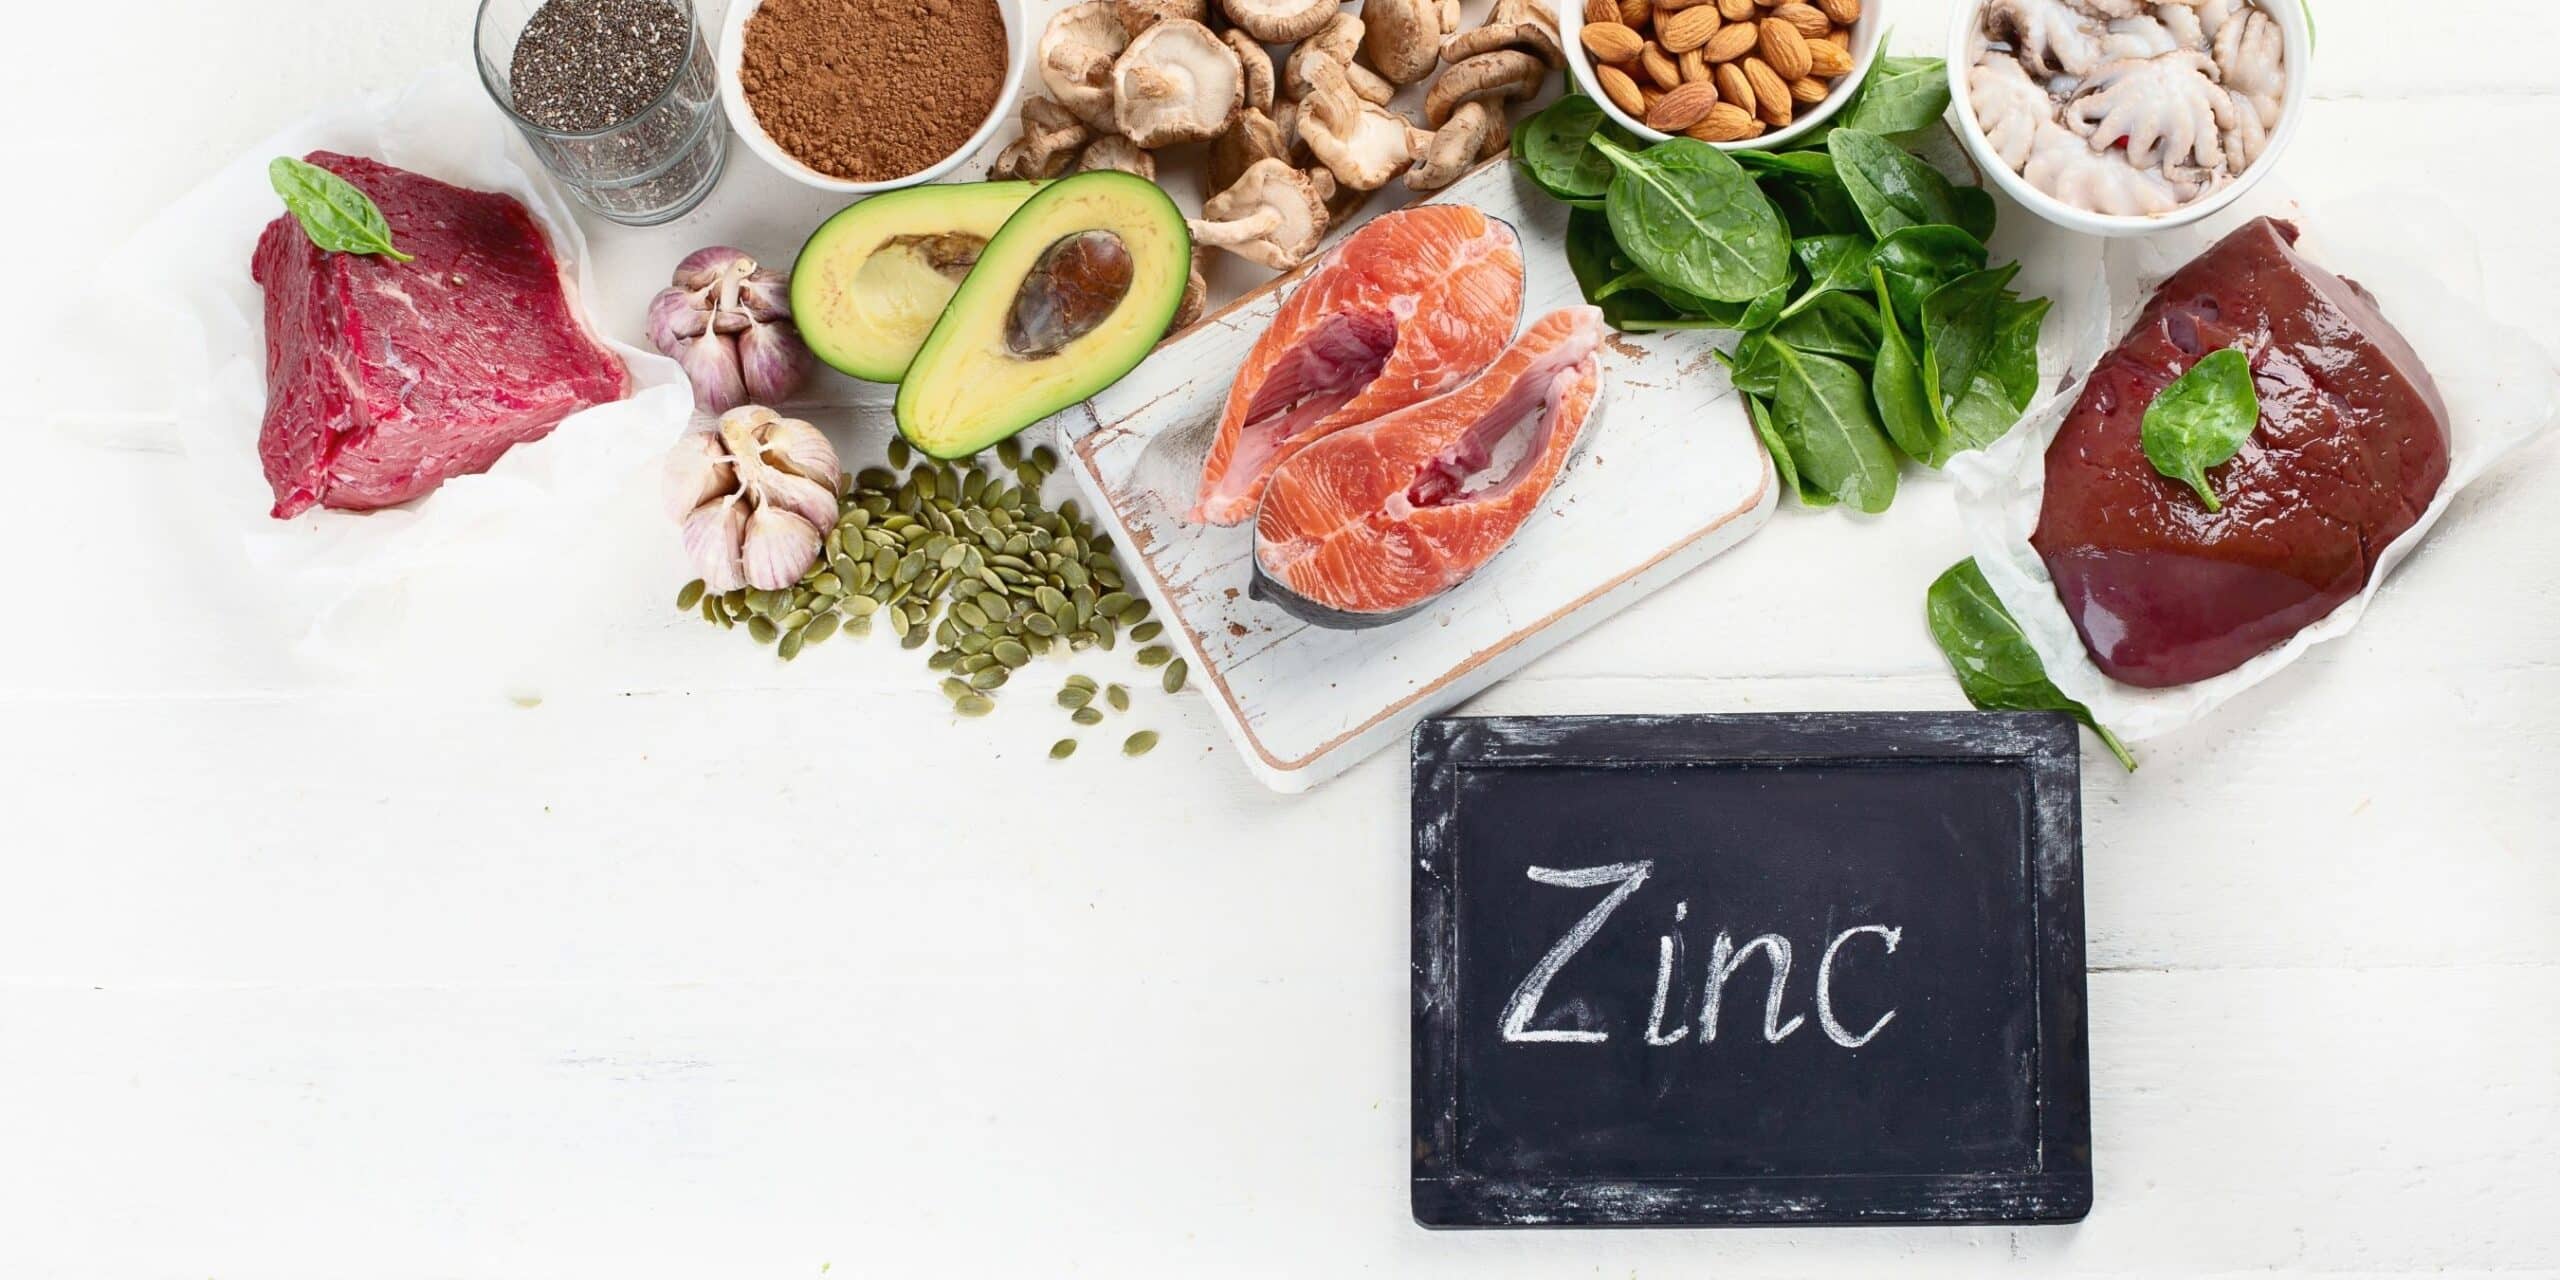 zinc written on chalkboard with zinc containing foods surrounding it